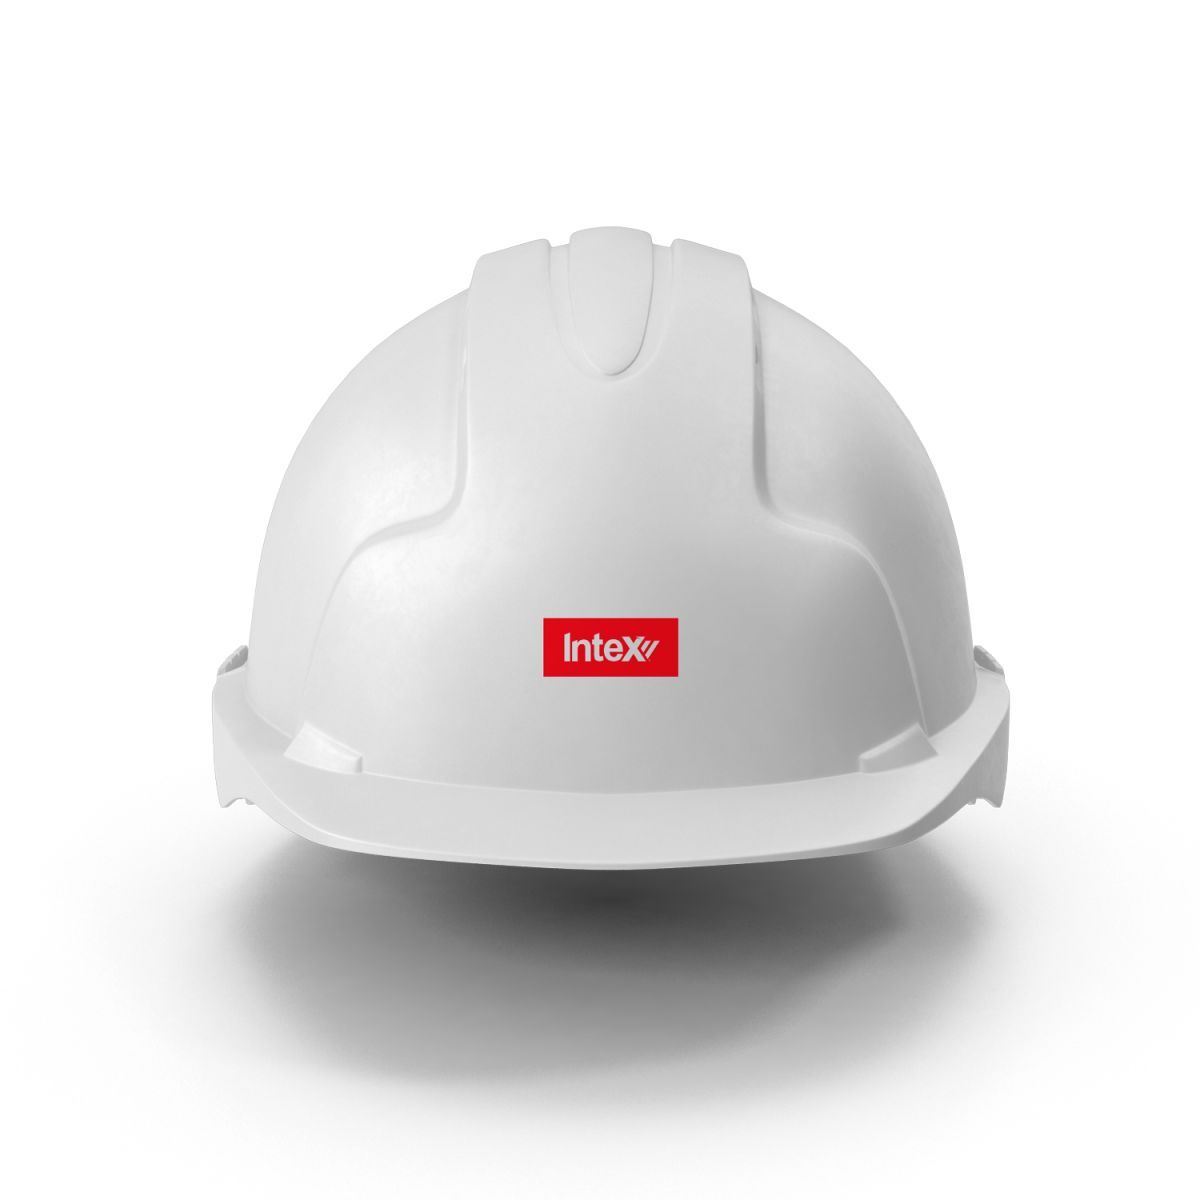 Intex ProtecX Contractor Hard Hat